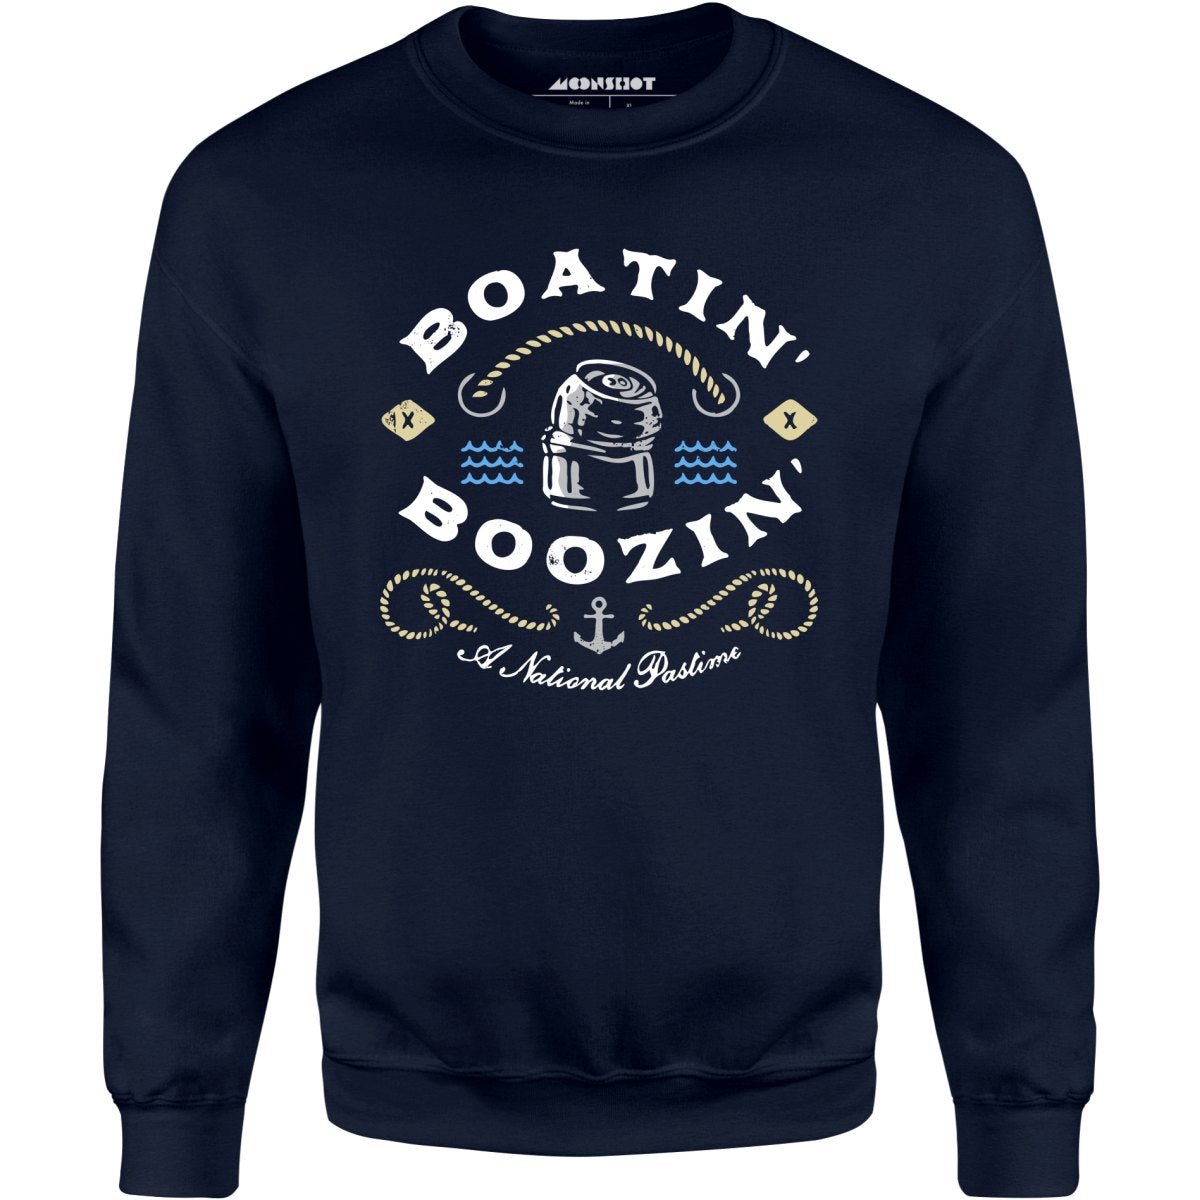 Boatin' & Boozin' - Unisex Sweatshirt